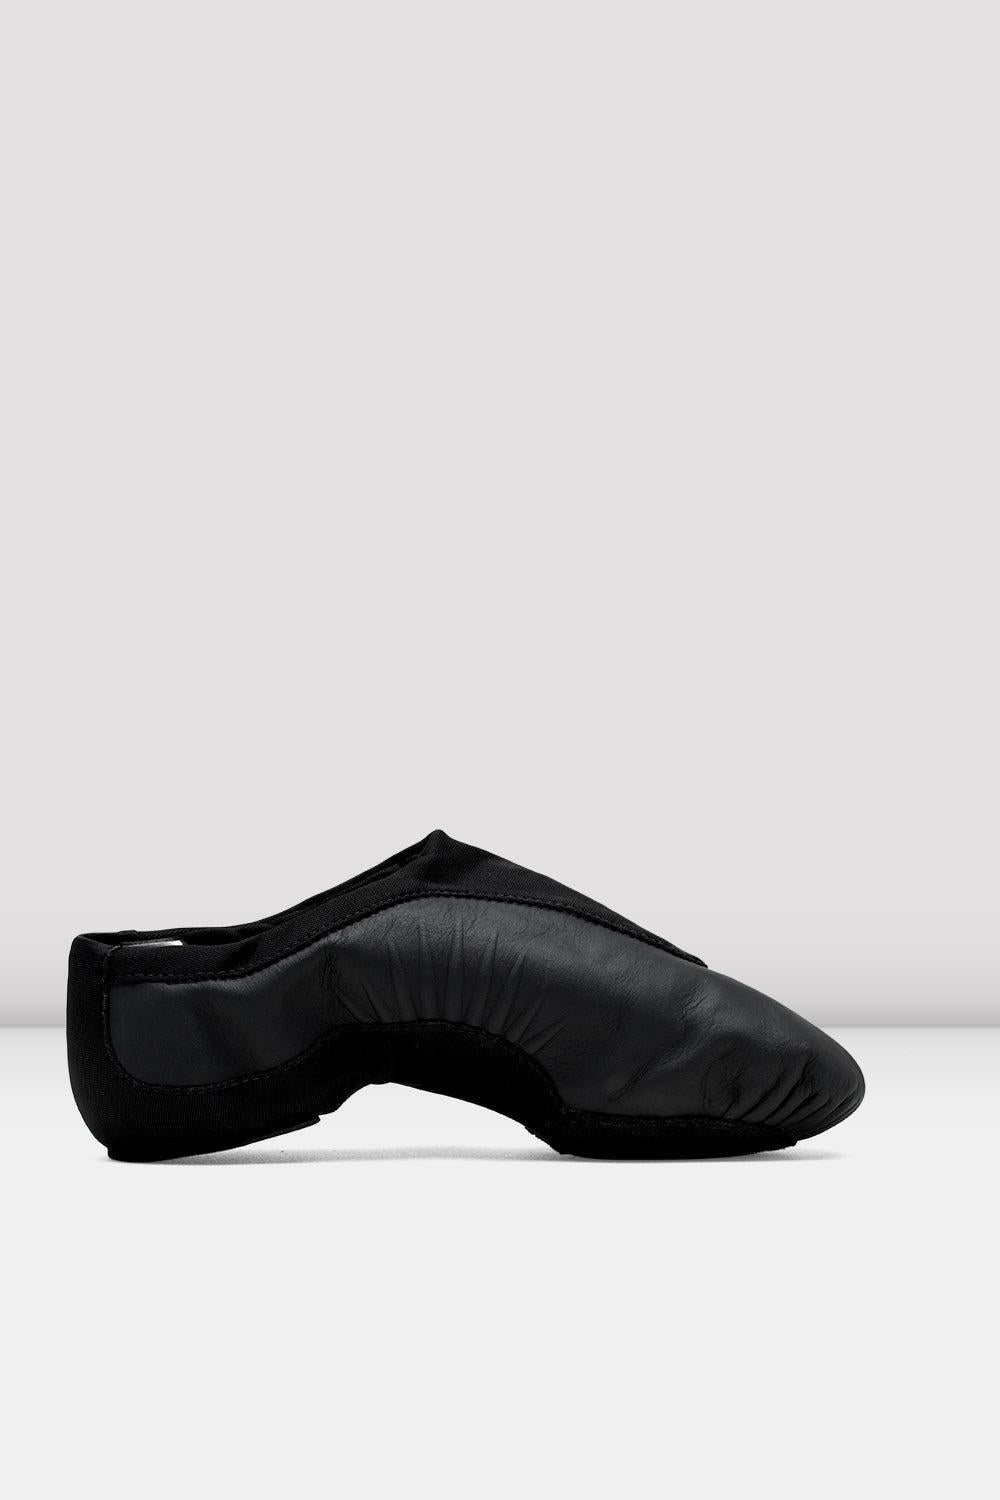 Bloch Pulse Jazz Shoe - ADULT